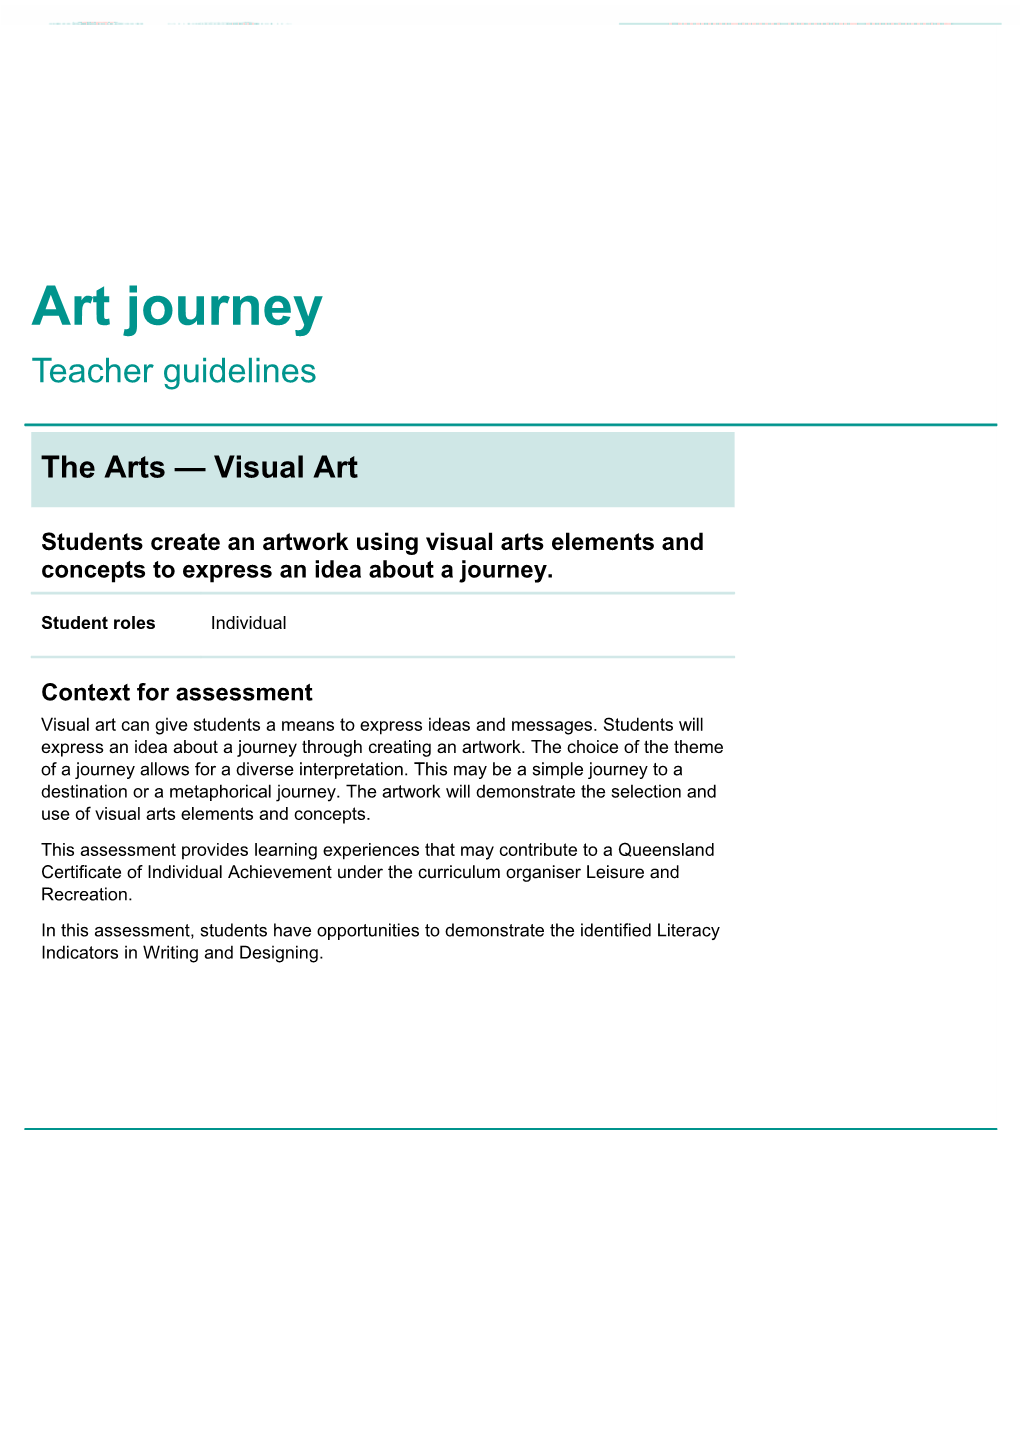 Year 5 the Arts - Visual Art Assessment Teacher Guidelines Art Journey Queensland Essential